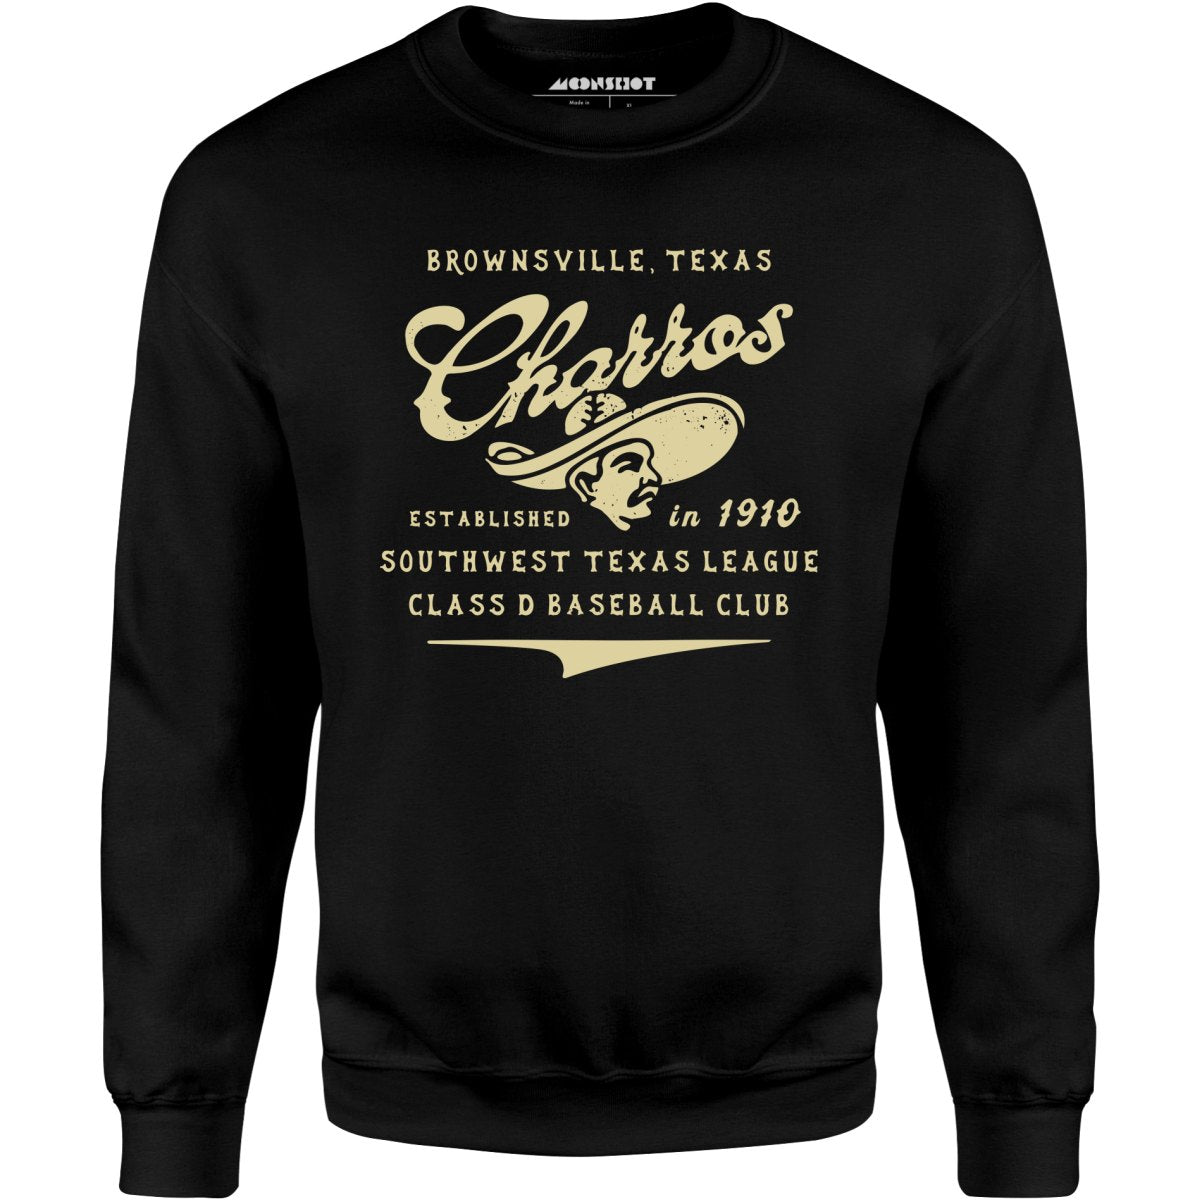 Brownsville Charros - Texas - Vintage Defunct Baseball Teams - Unisex Sweatshirt